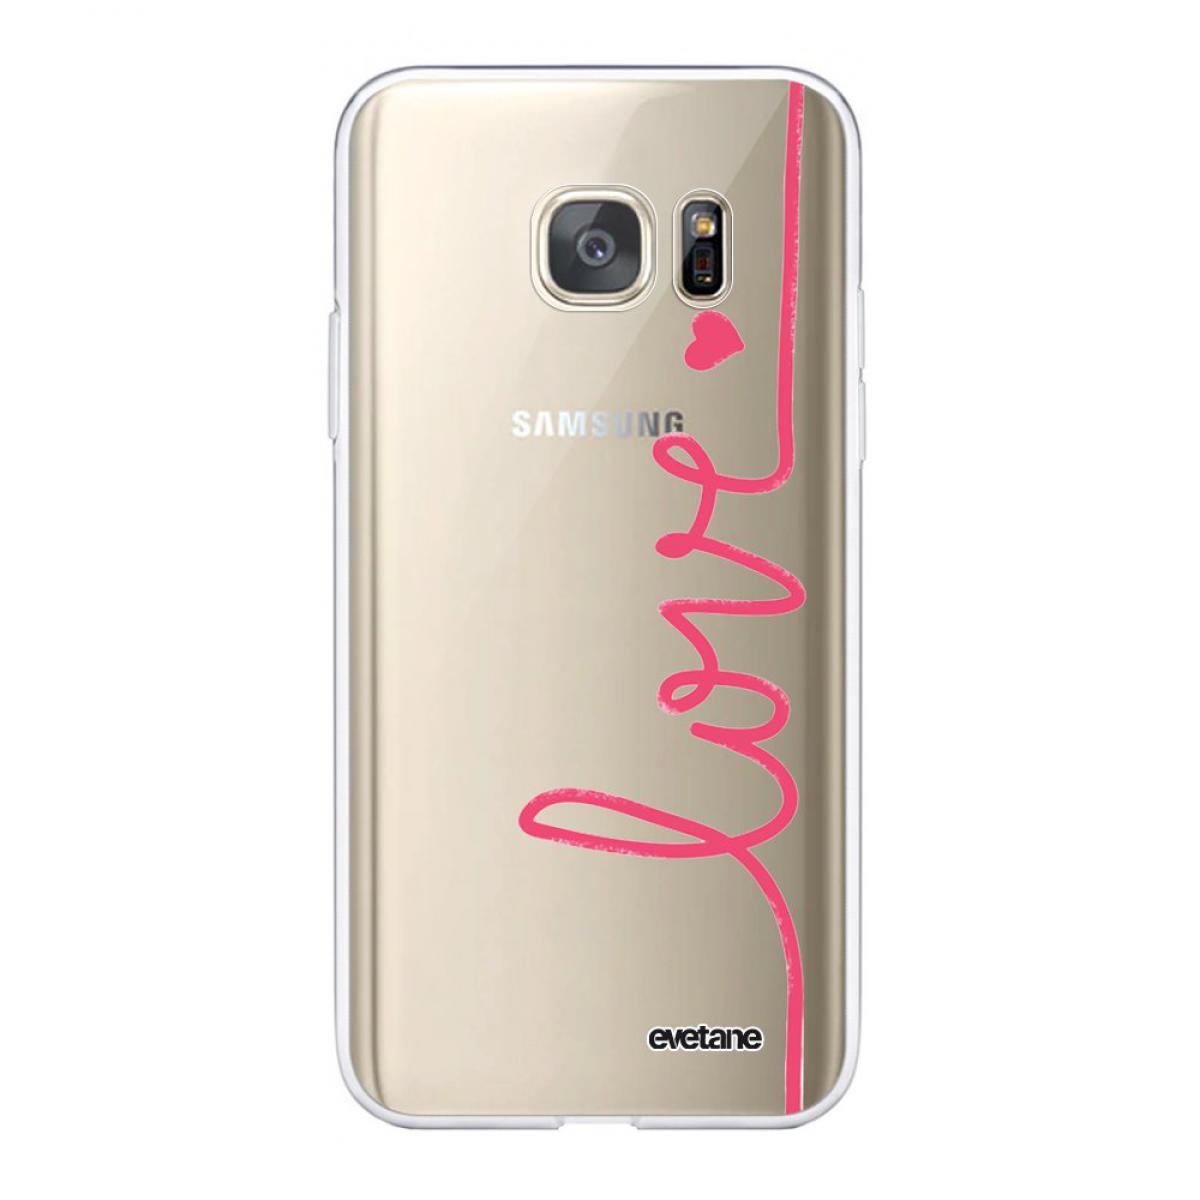 Evetane - Coque Samsung Galaxy S7 360 intégrale transparente Love Tendance Evetane. - Coque, étui smartphone